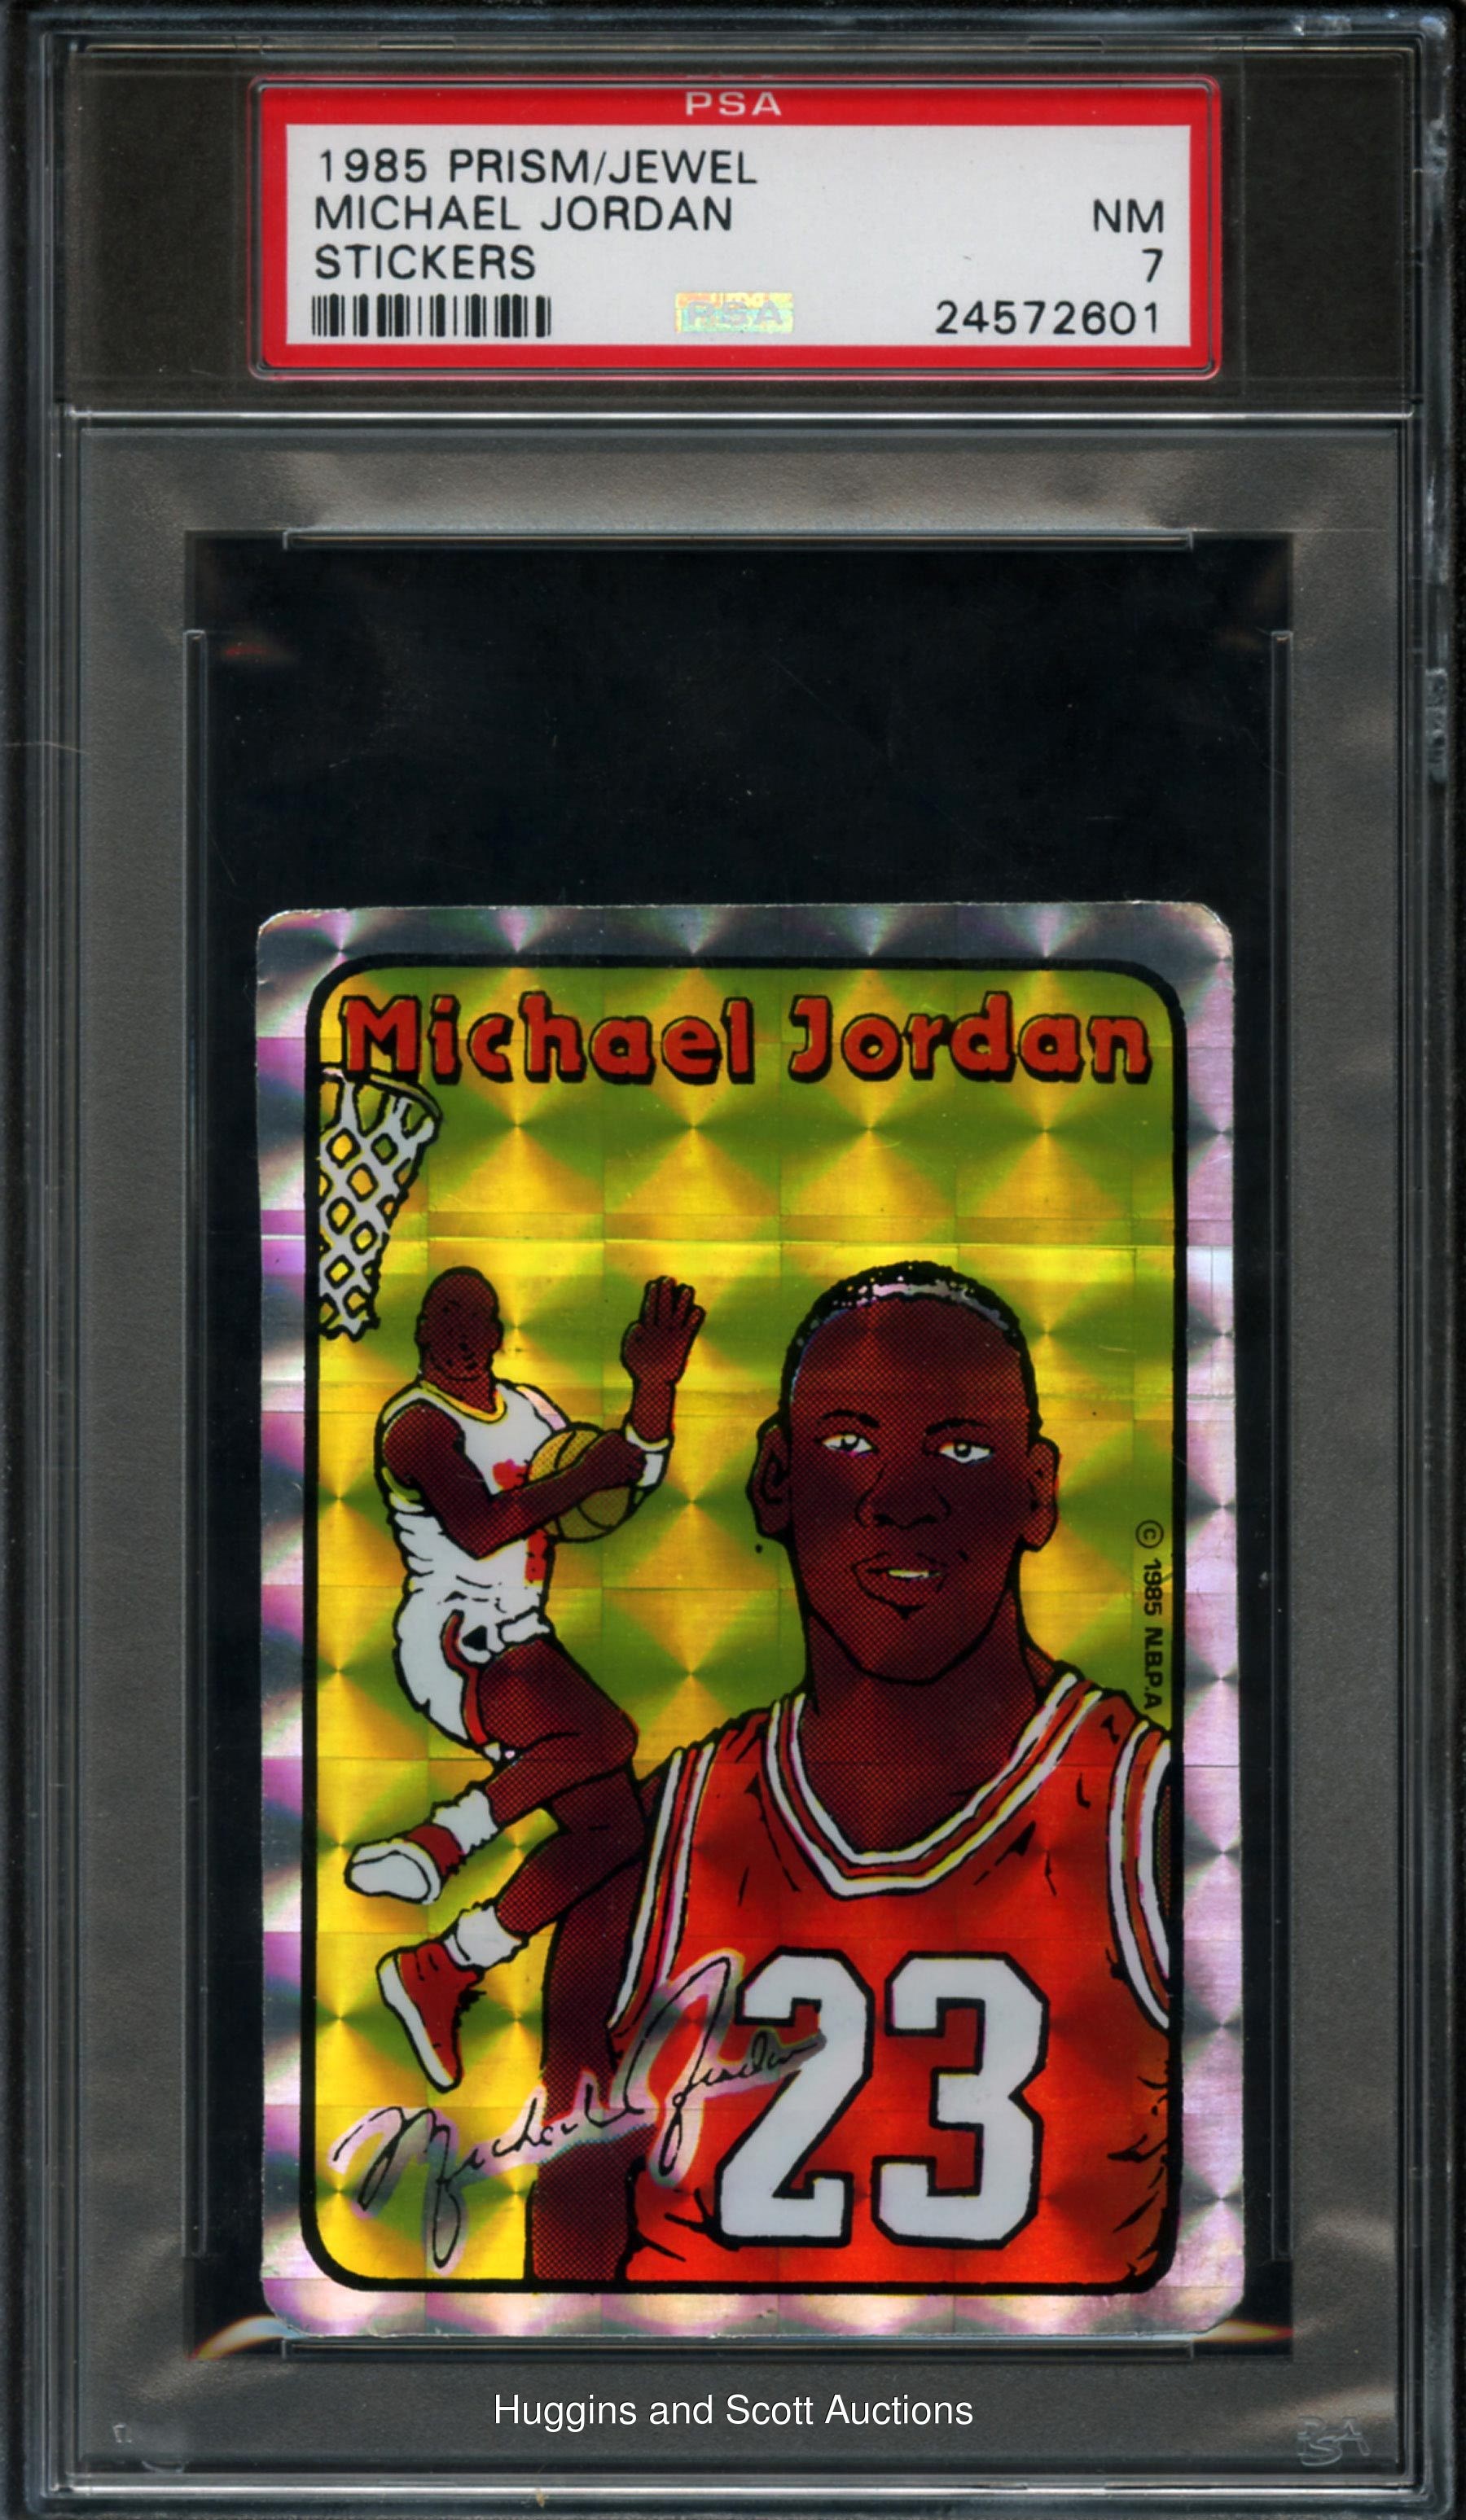 1985 Prism/Jewel Stickers Michael Jordan Rookie PSA NM 7